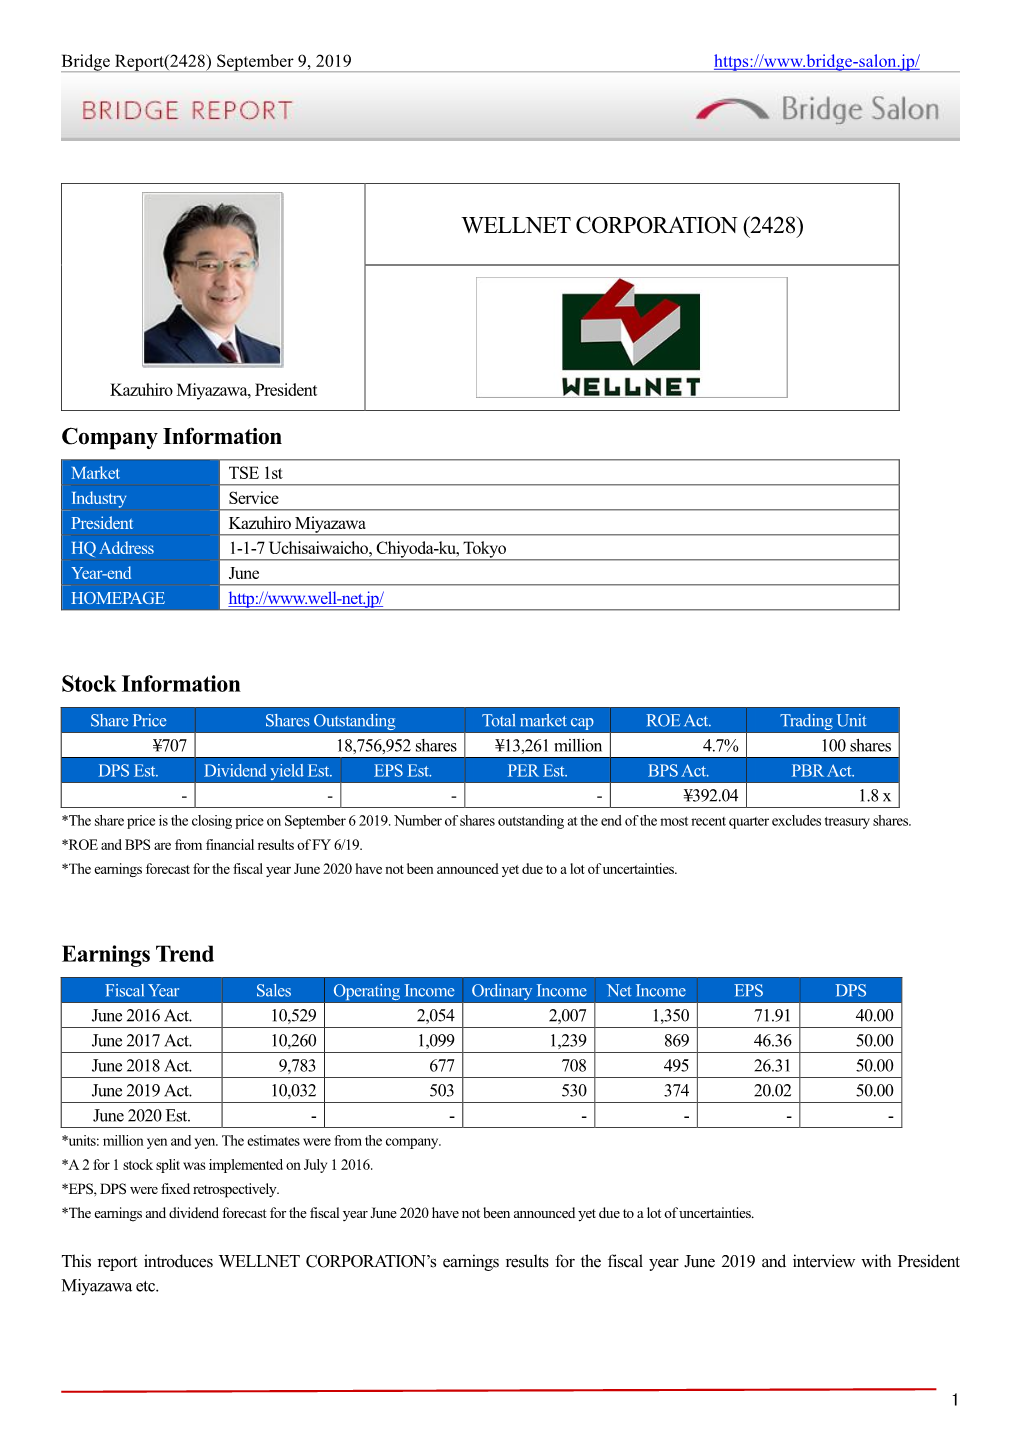 WELLNET CORPORATION (2428) Company Information Stock